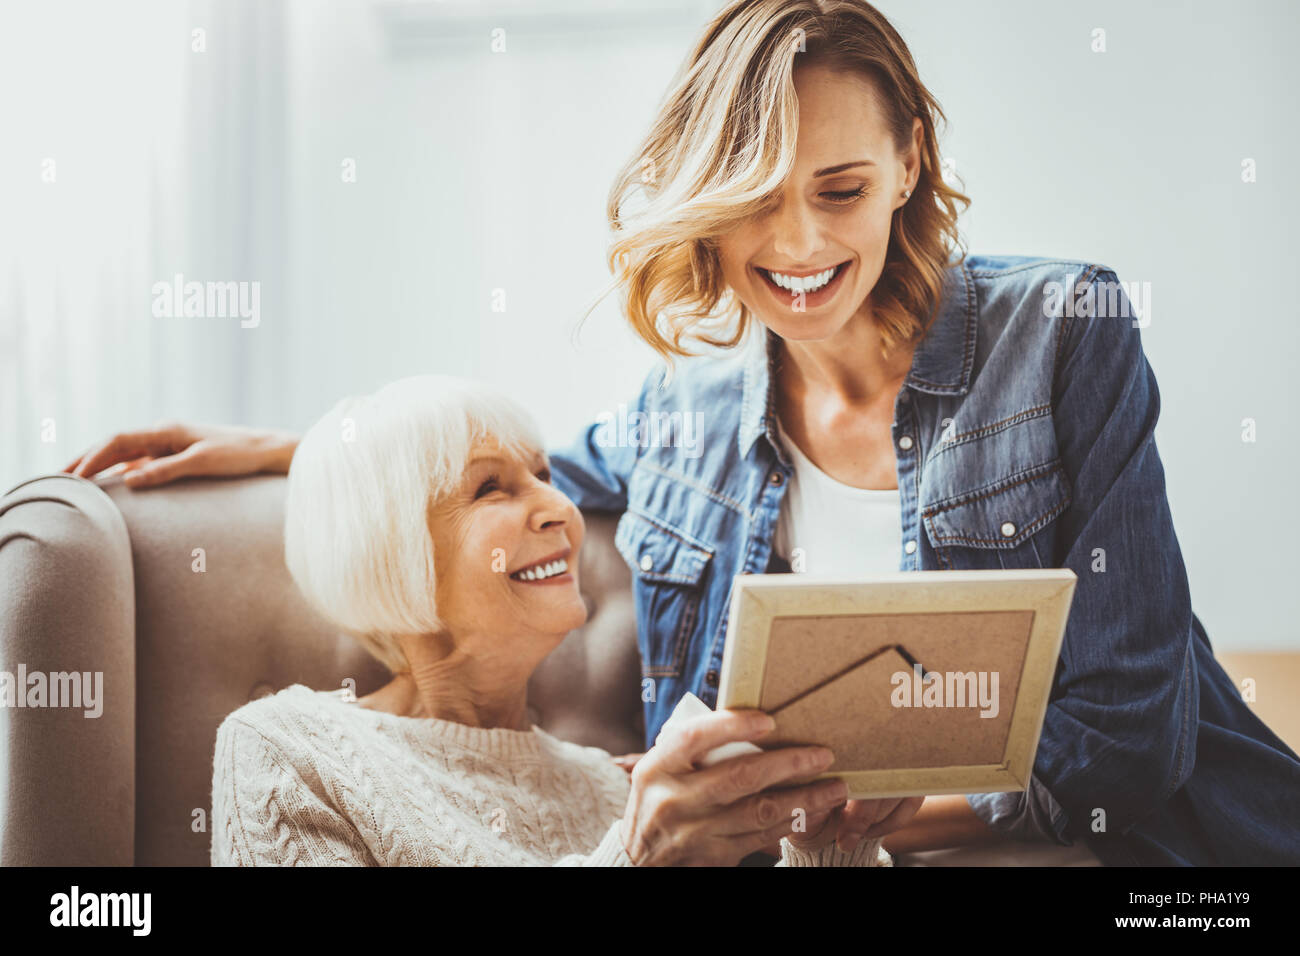 Amazing blonde woman sitting near her grandmother Stock Photo